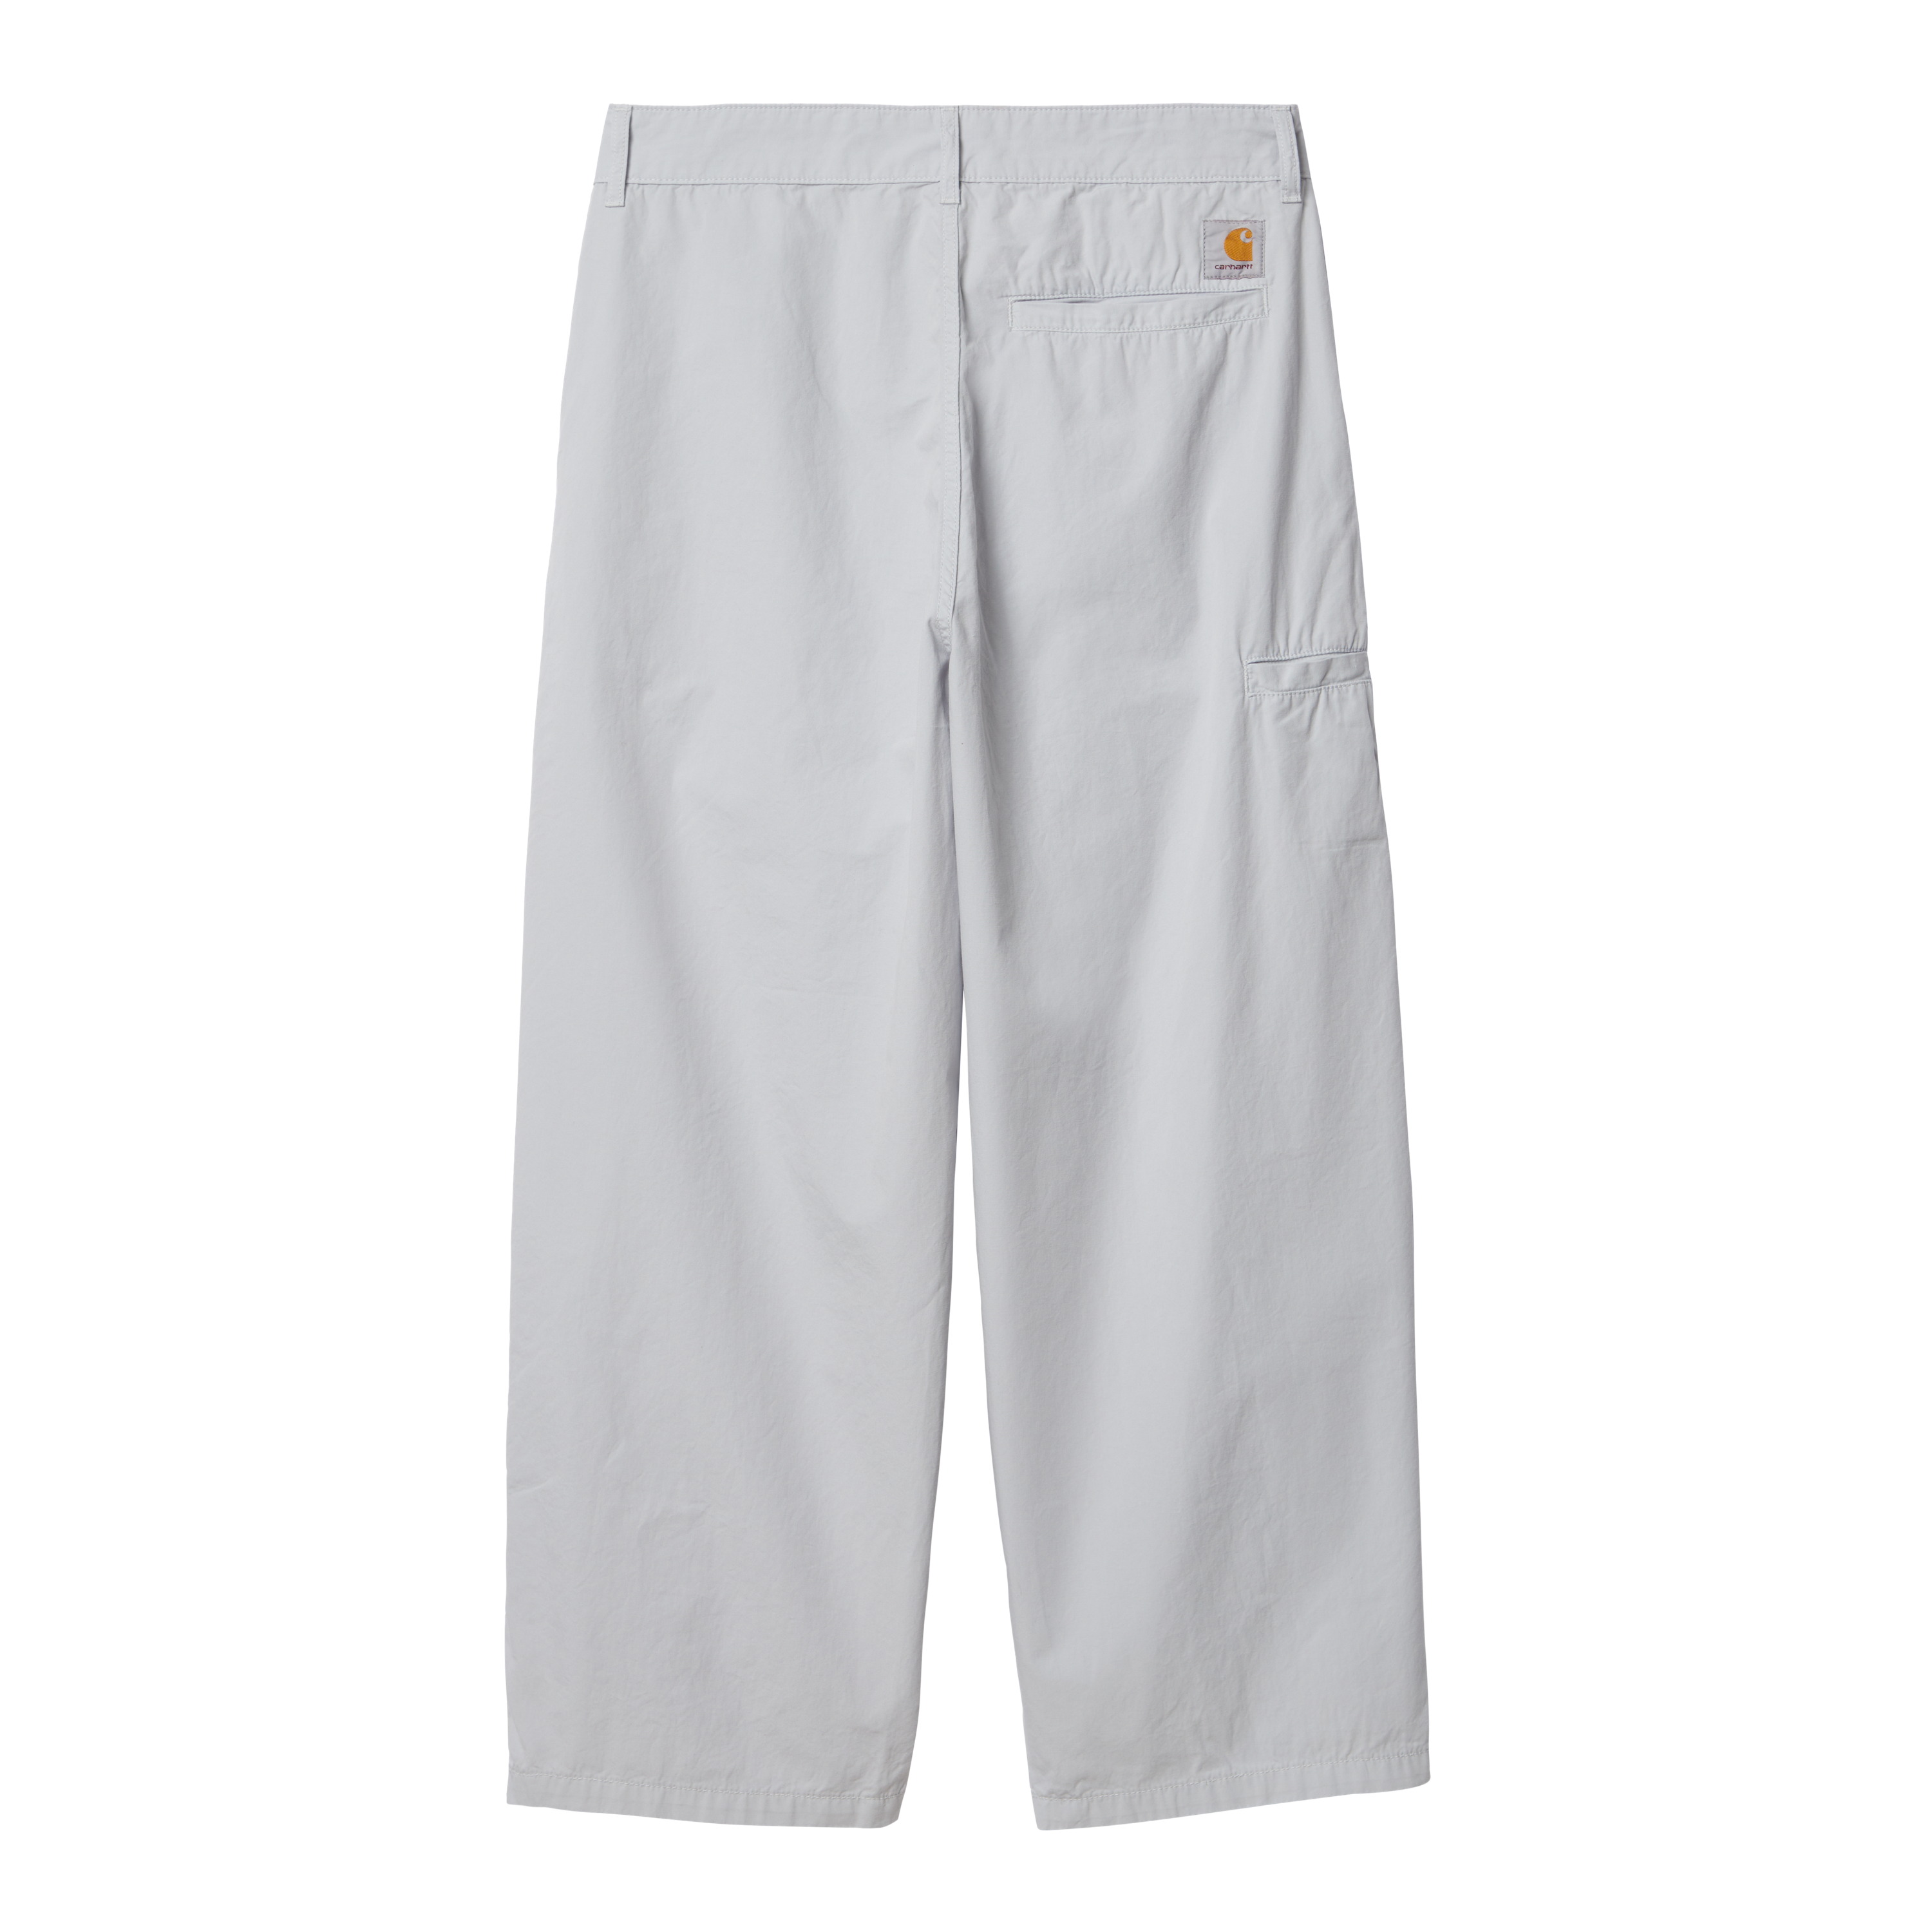 Carhartt WIP Colston Pant in Grey